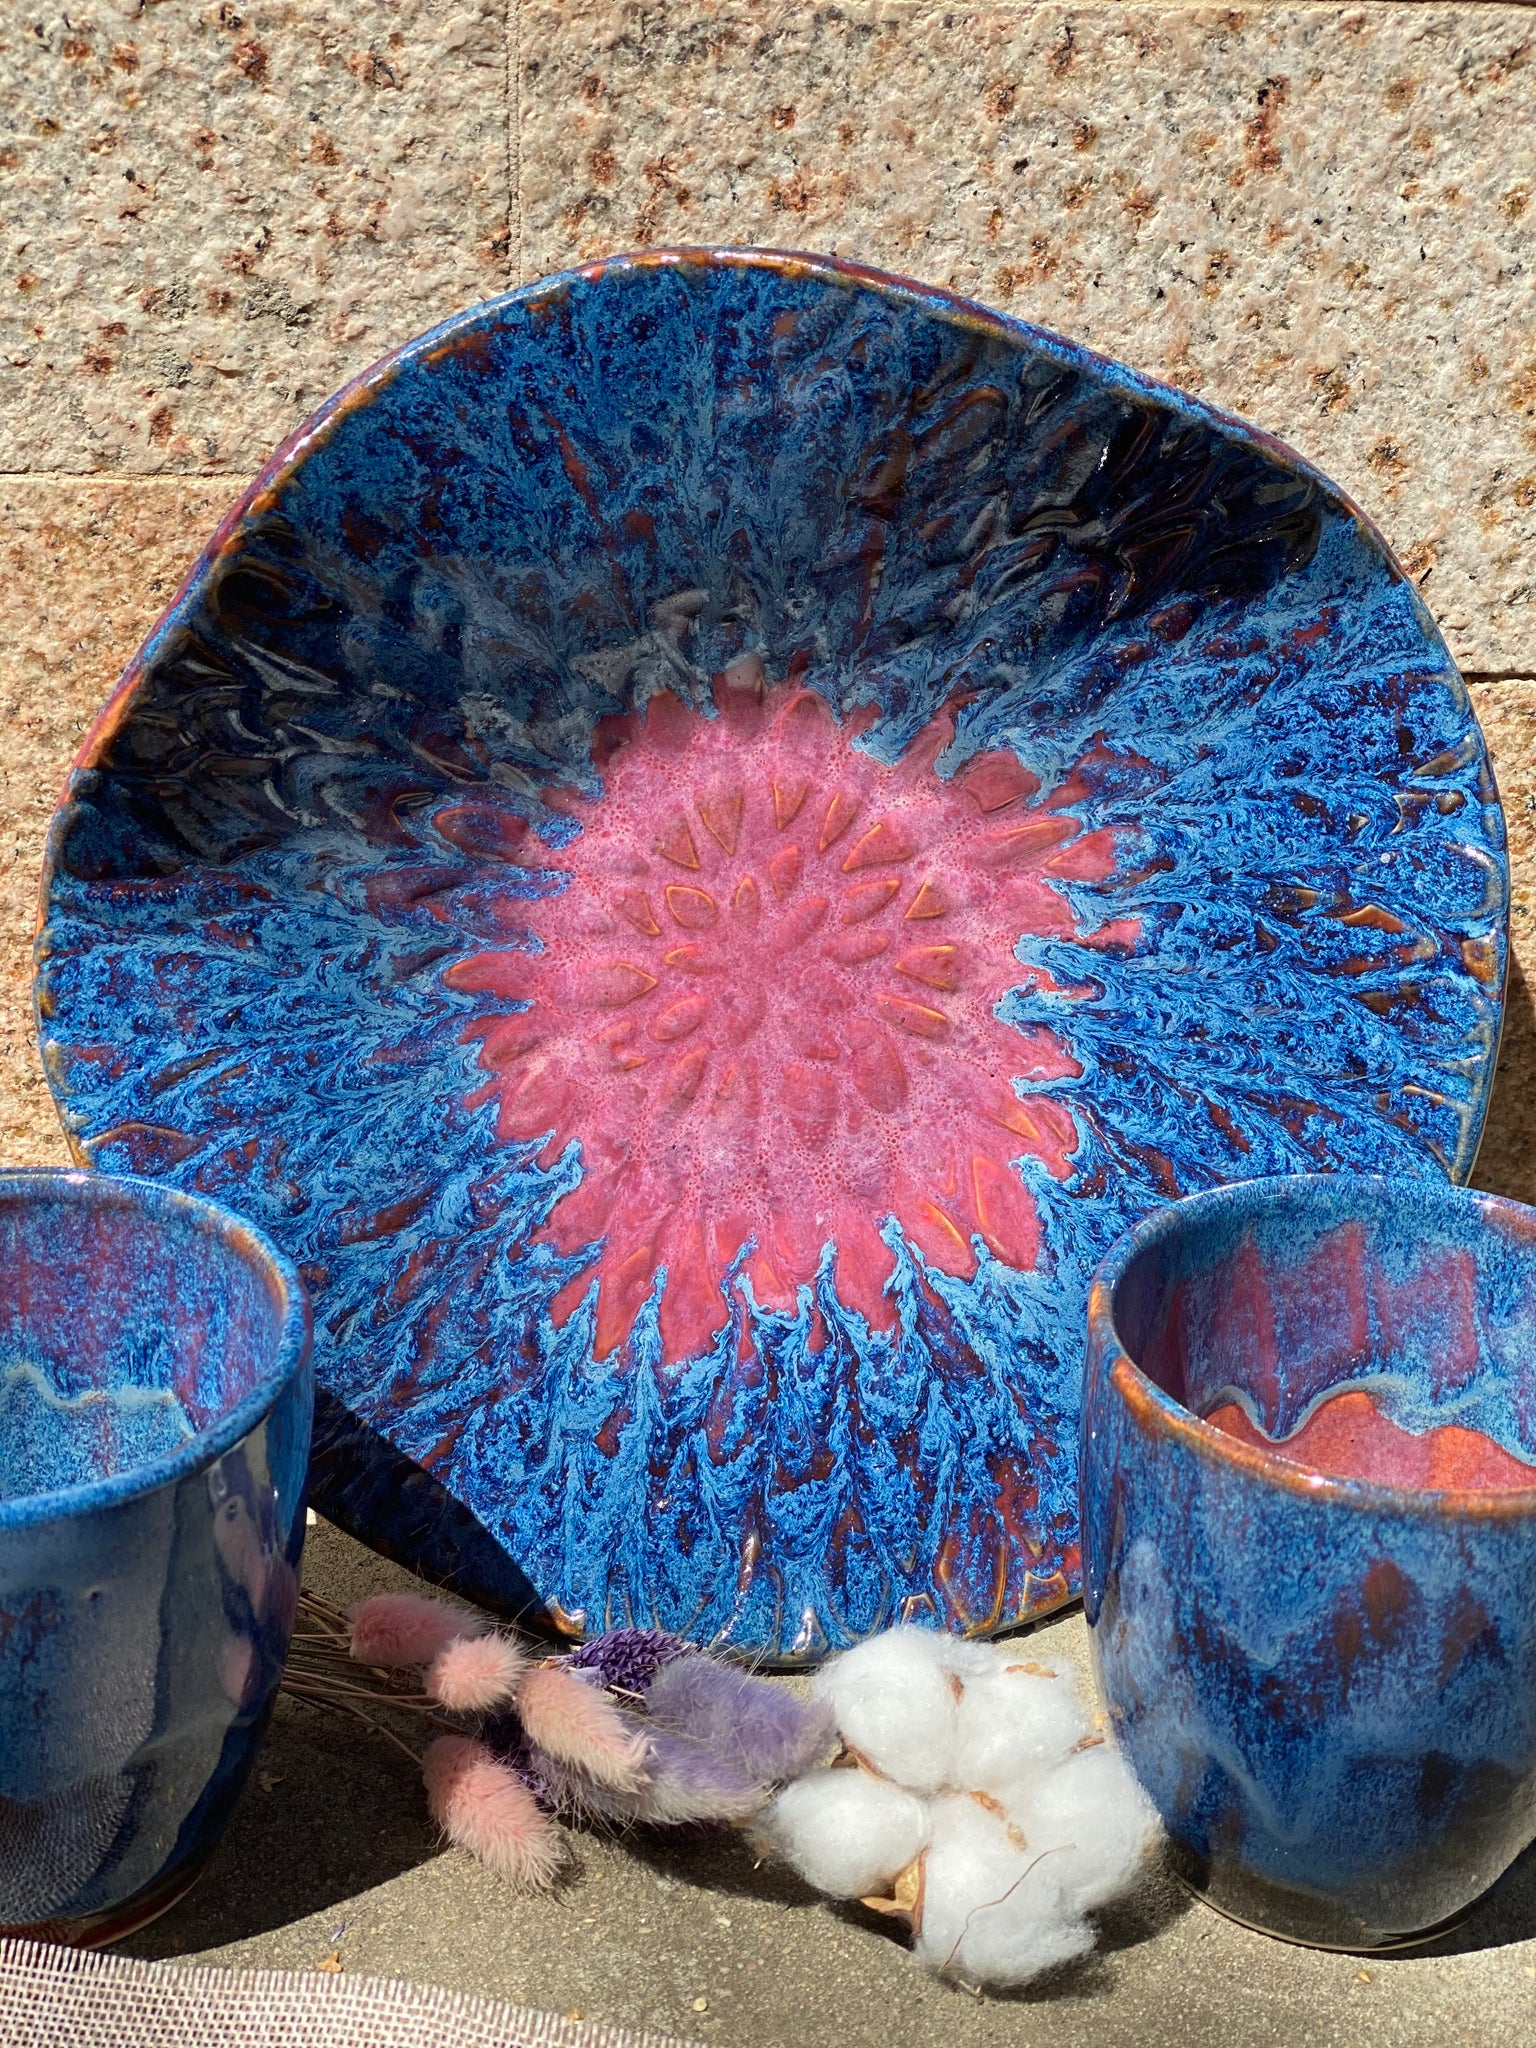 Violet Set of Glazed Ceramic Dishes and Mugs